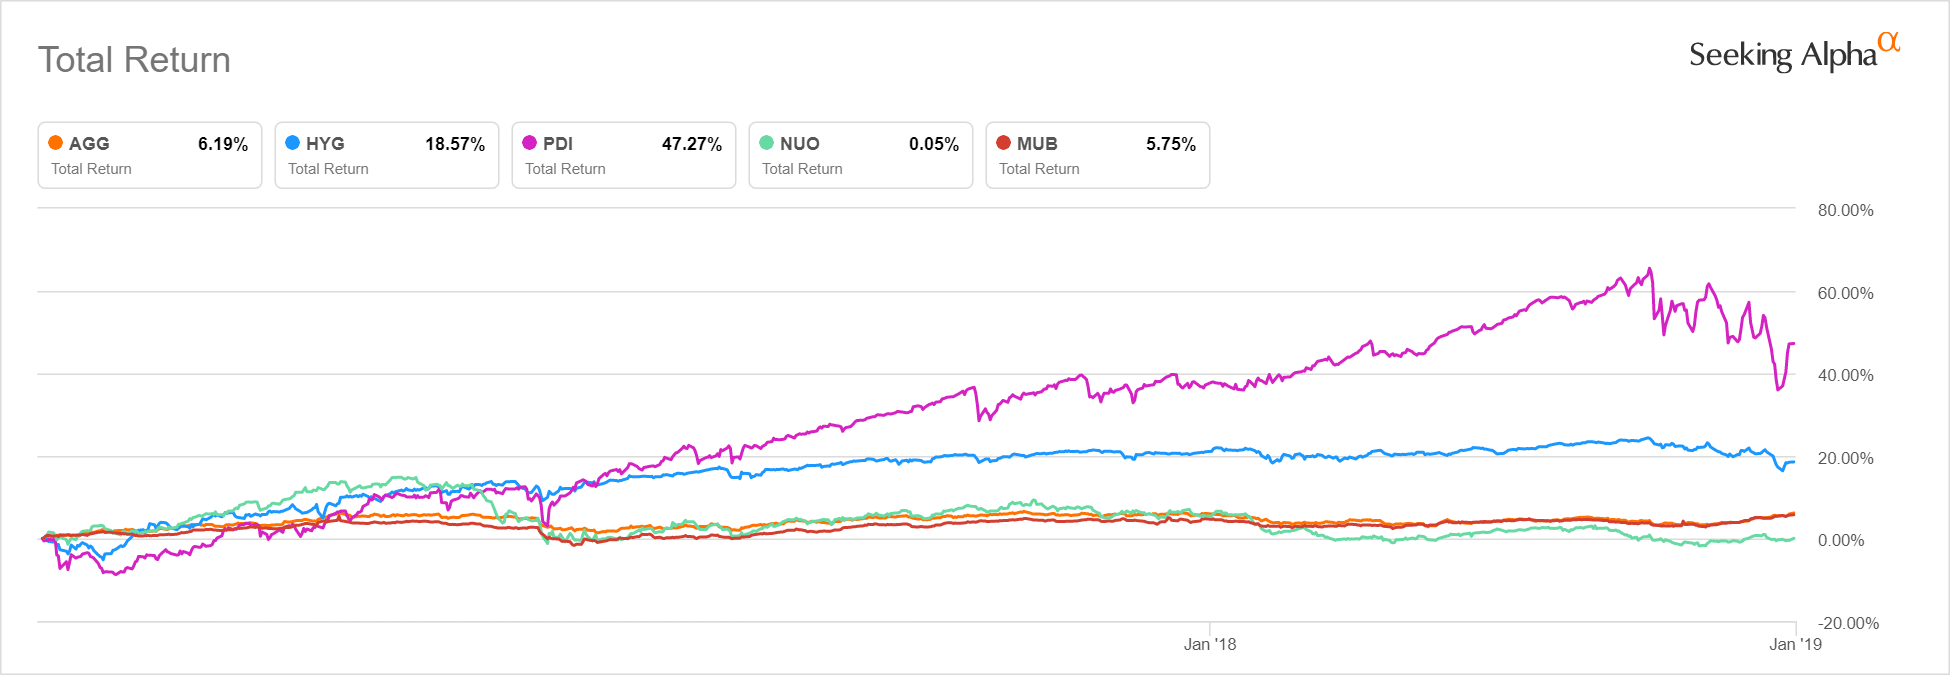 PDI Performance Chart 2016-2018